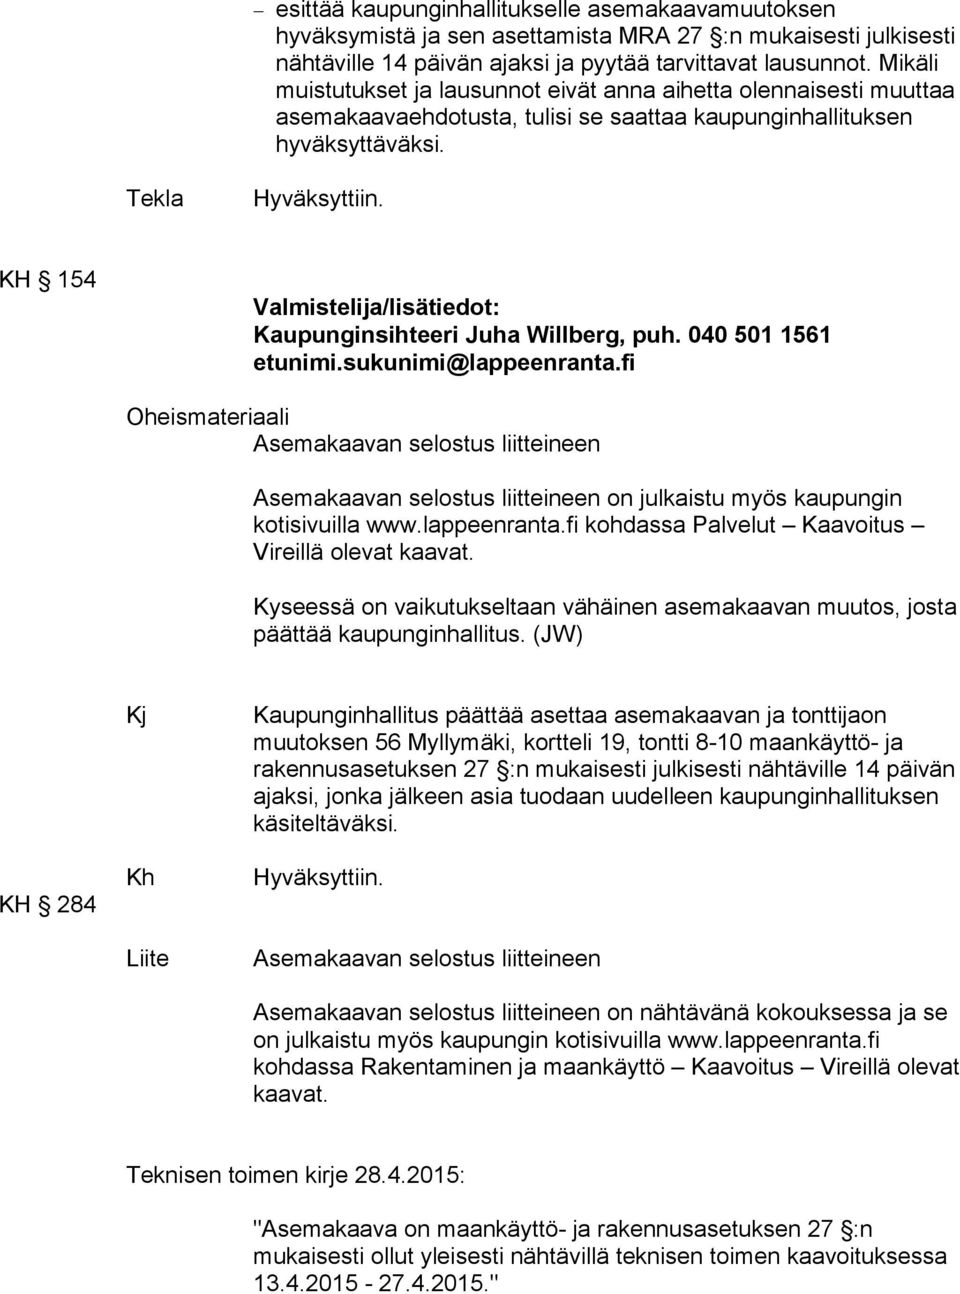 Tekla KH 154 Valmistelija/lisätiedot: Kaupunginsihteeri Juha Willberg, puh. 040 501 1561 etunimi.sukunimi@lappeenranta.